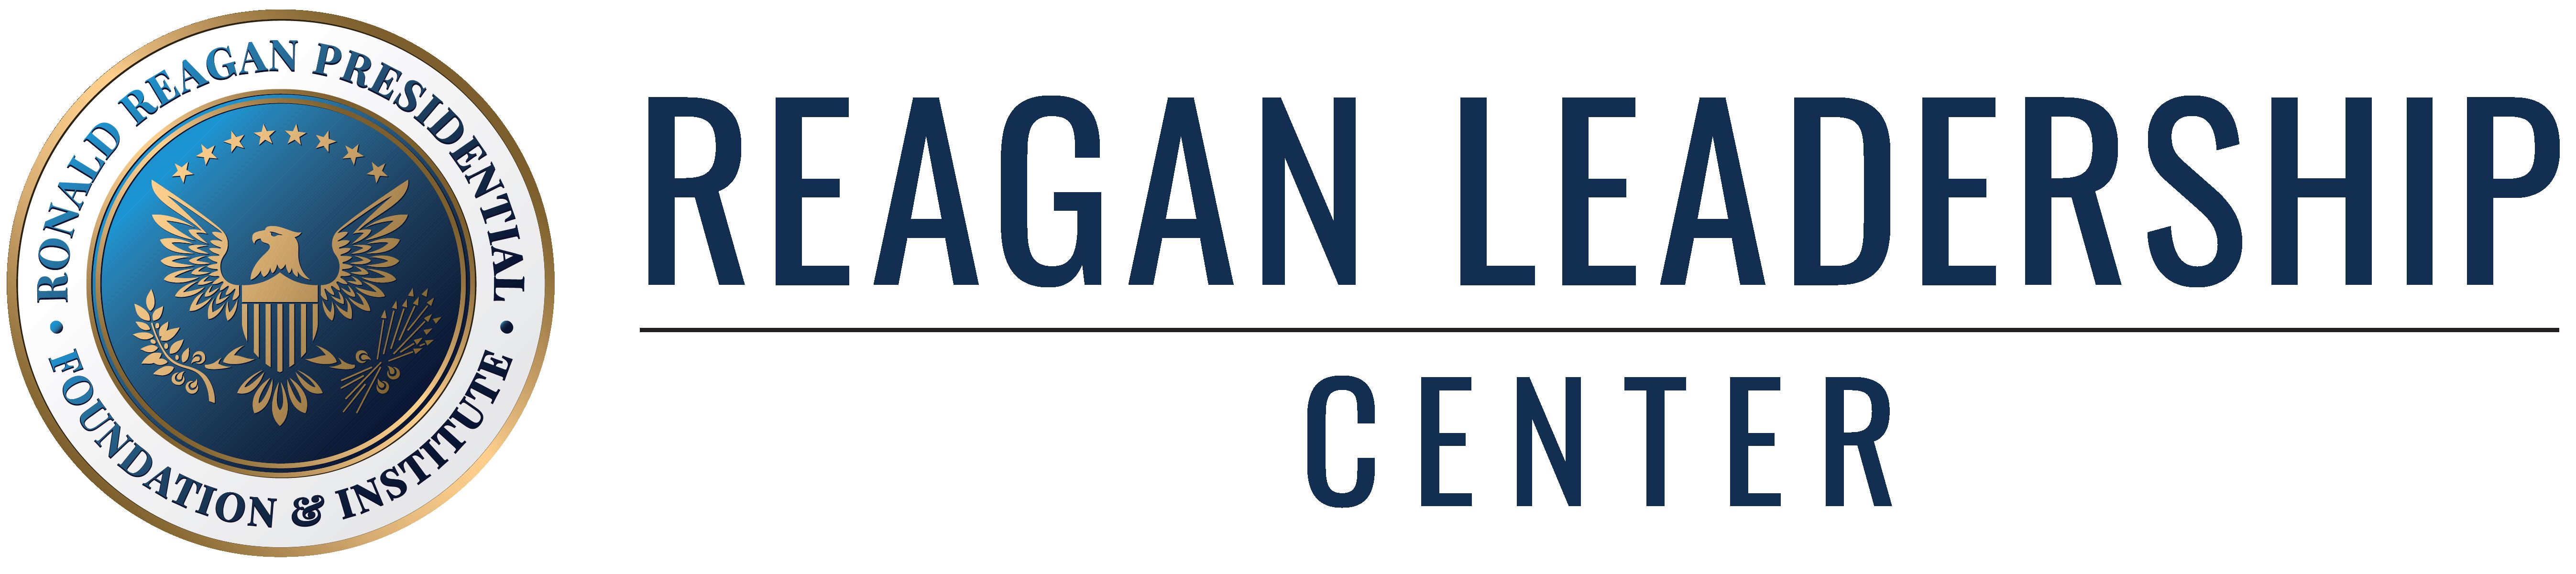 Reagan Leadership Center Logo